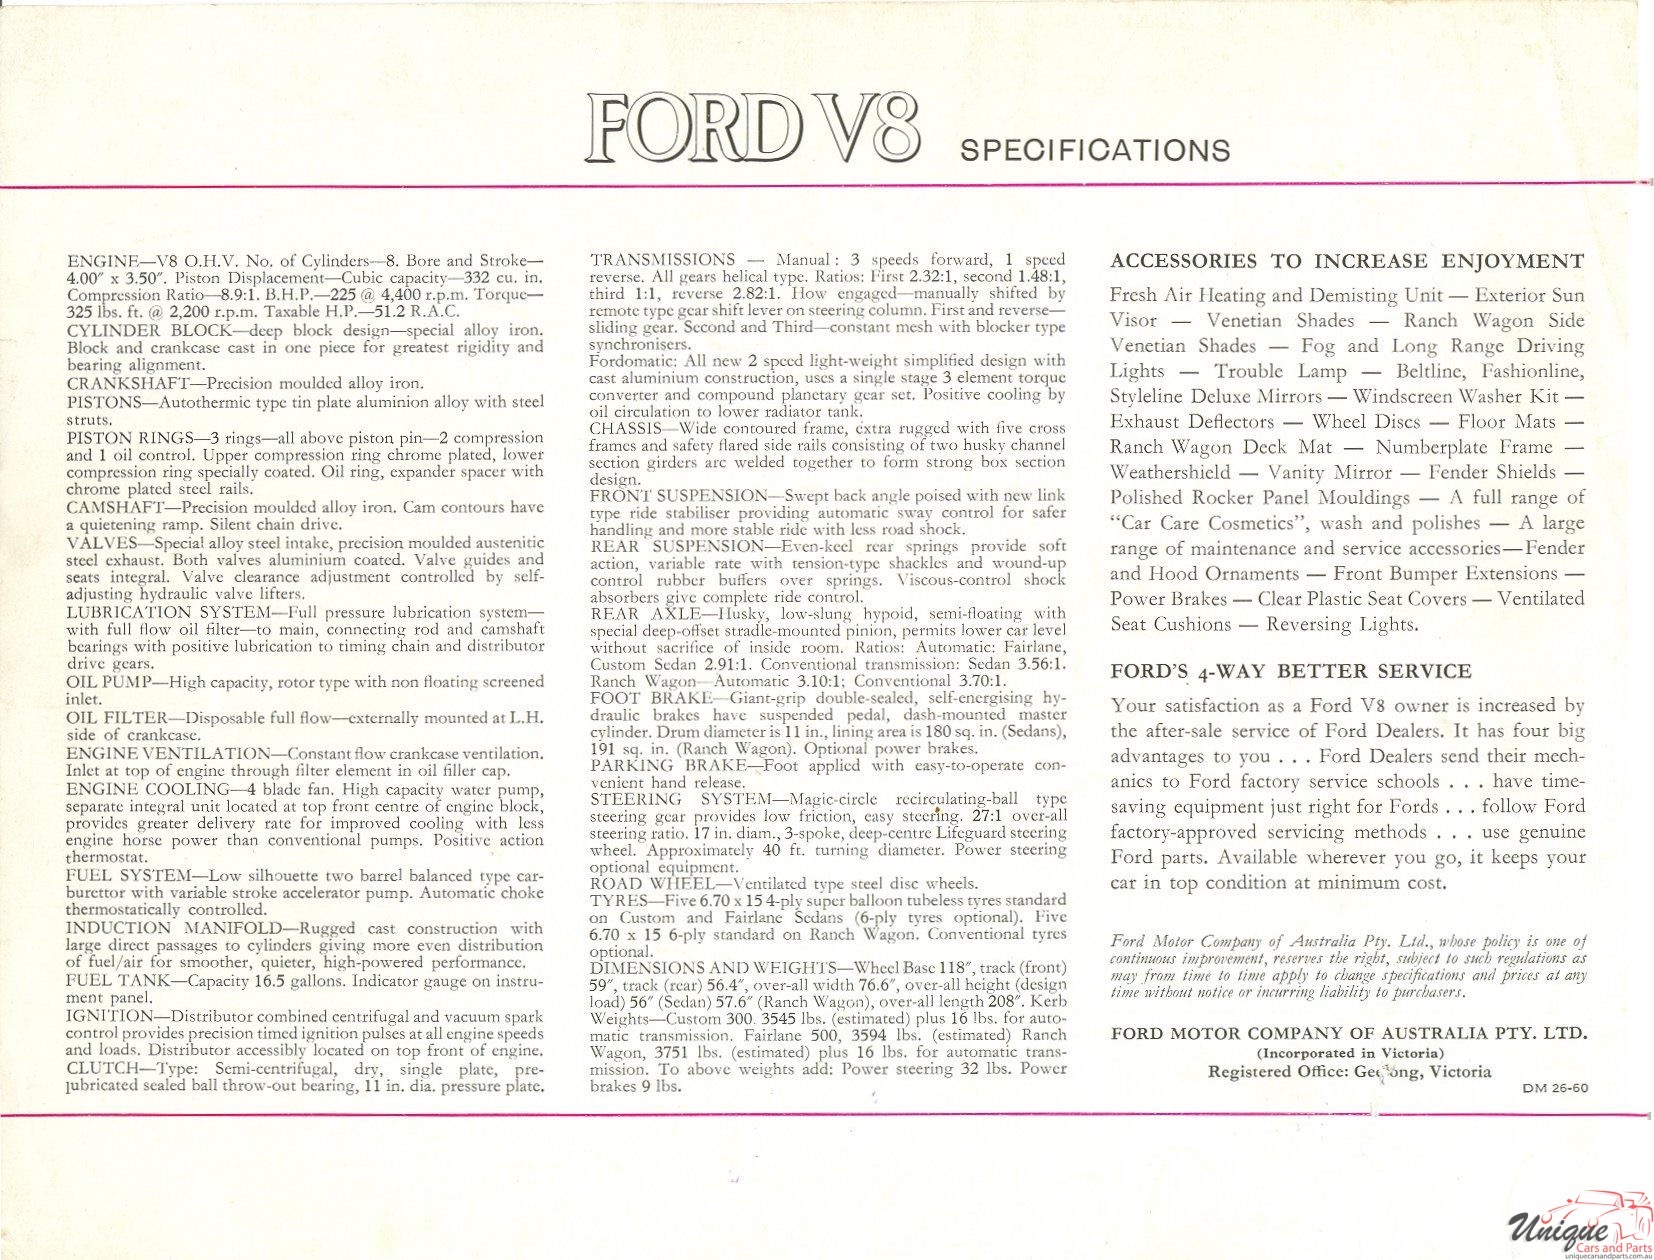 1960 Ford Fairlane Brochure - Australia Page 7